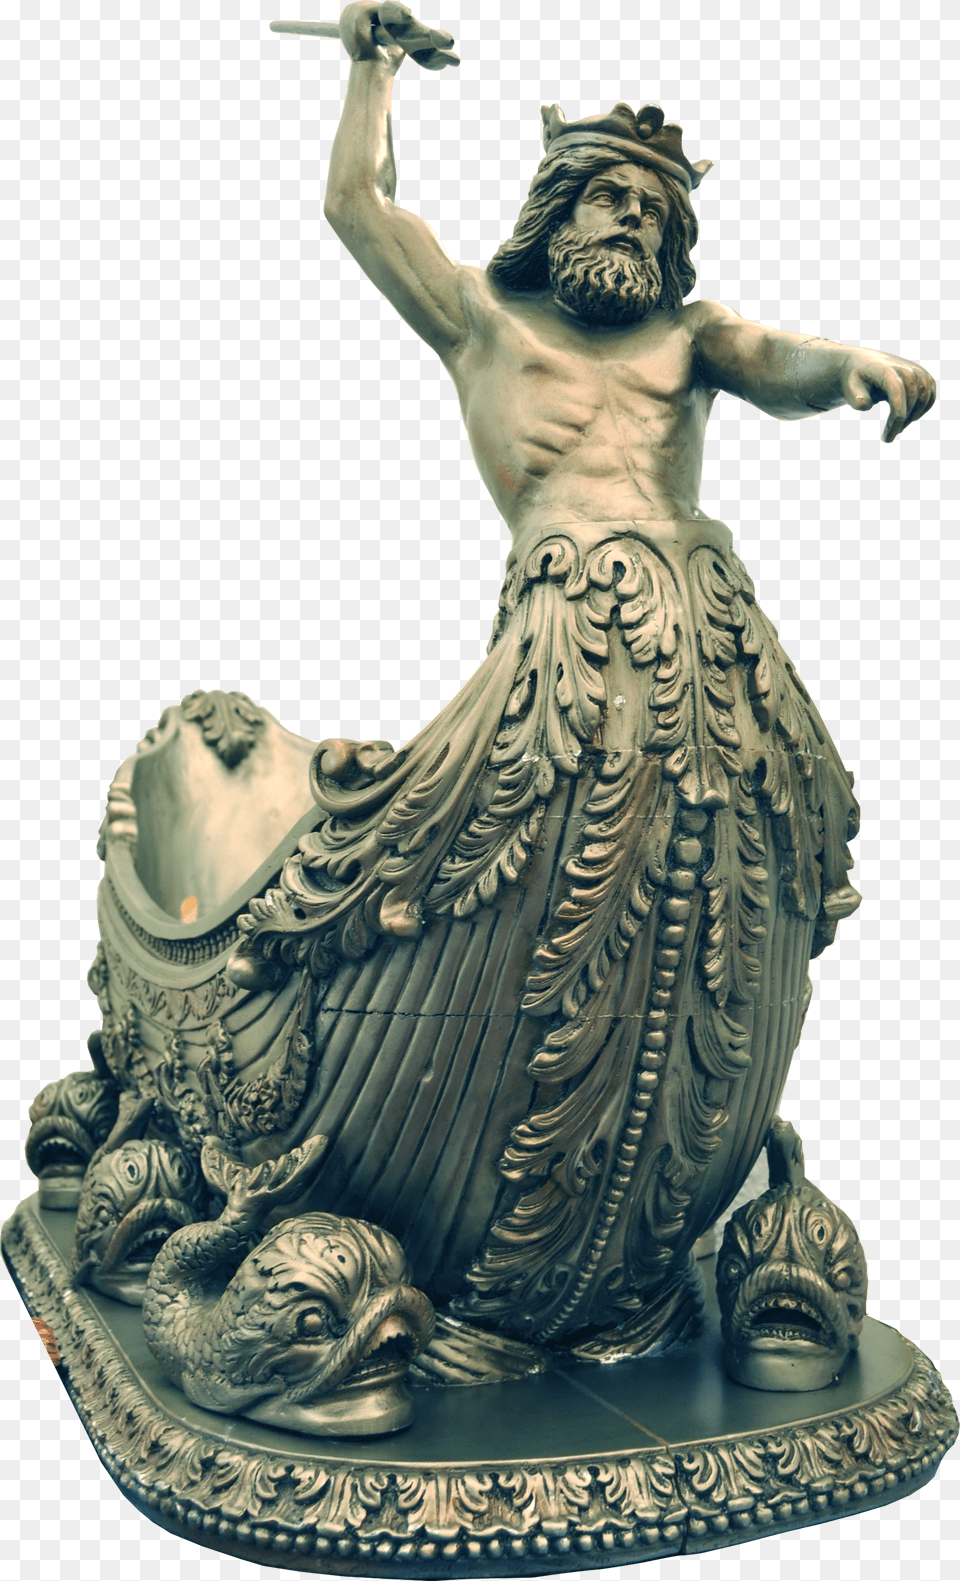 Statue Figurine King Poseidon Neptuno Poseidon Png